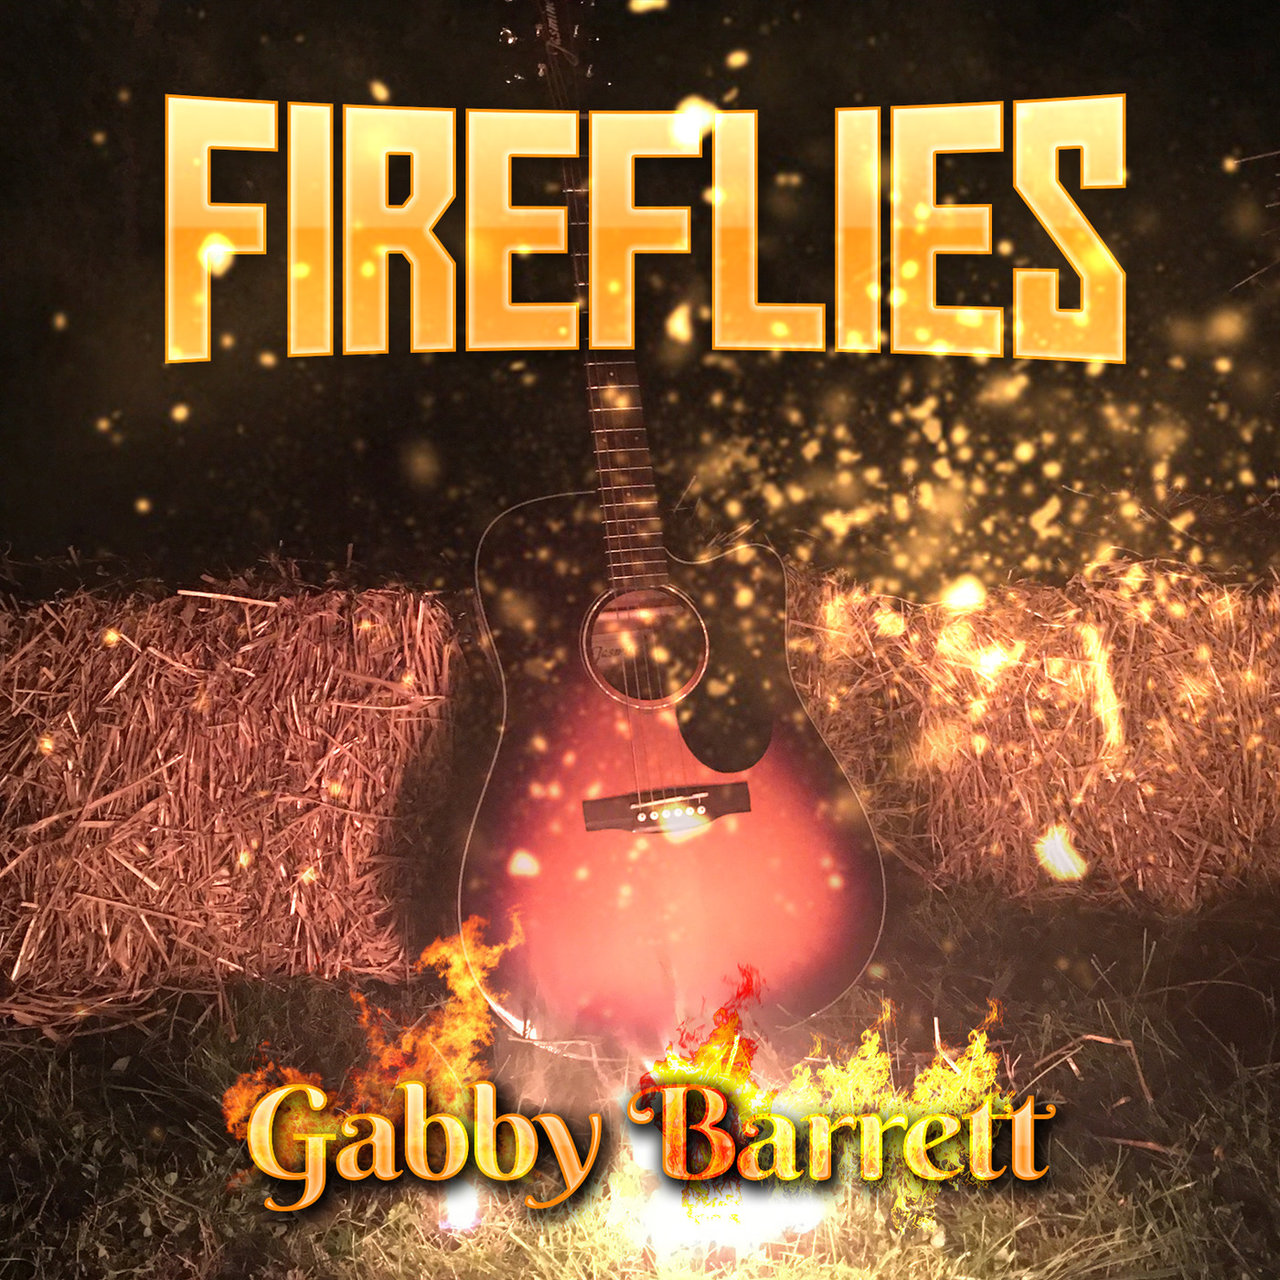 Gabby Barrett - Fireflies
Released: October 10, 2018 
Horizontal Trees LLC
